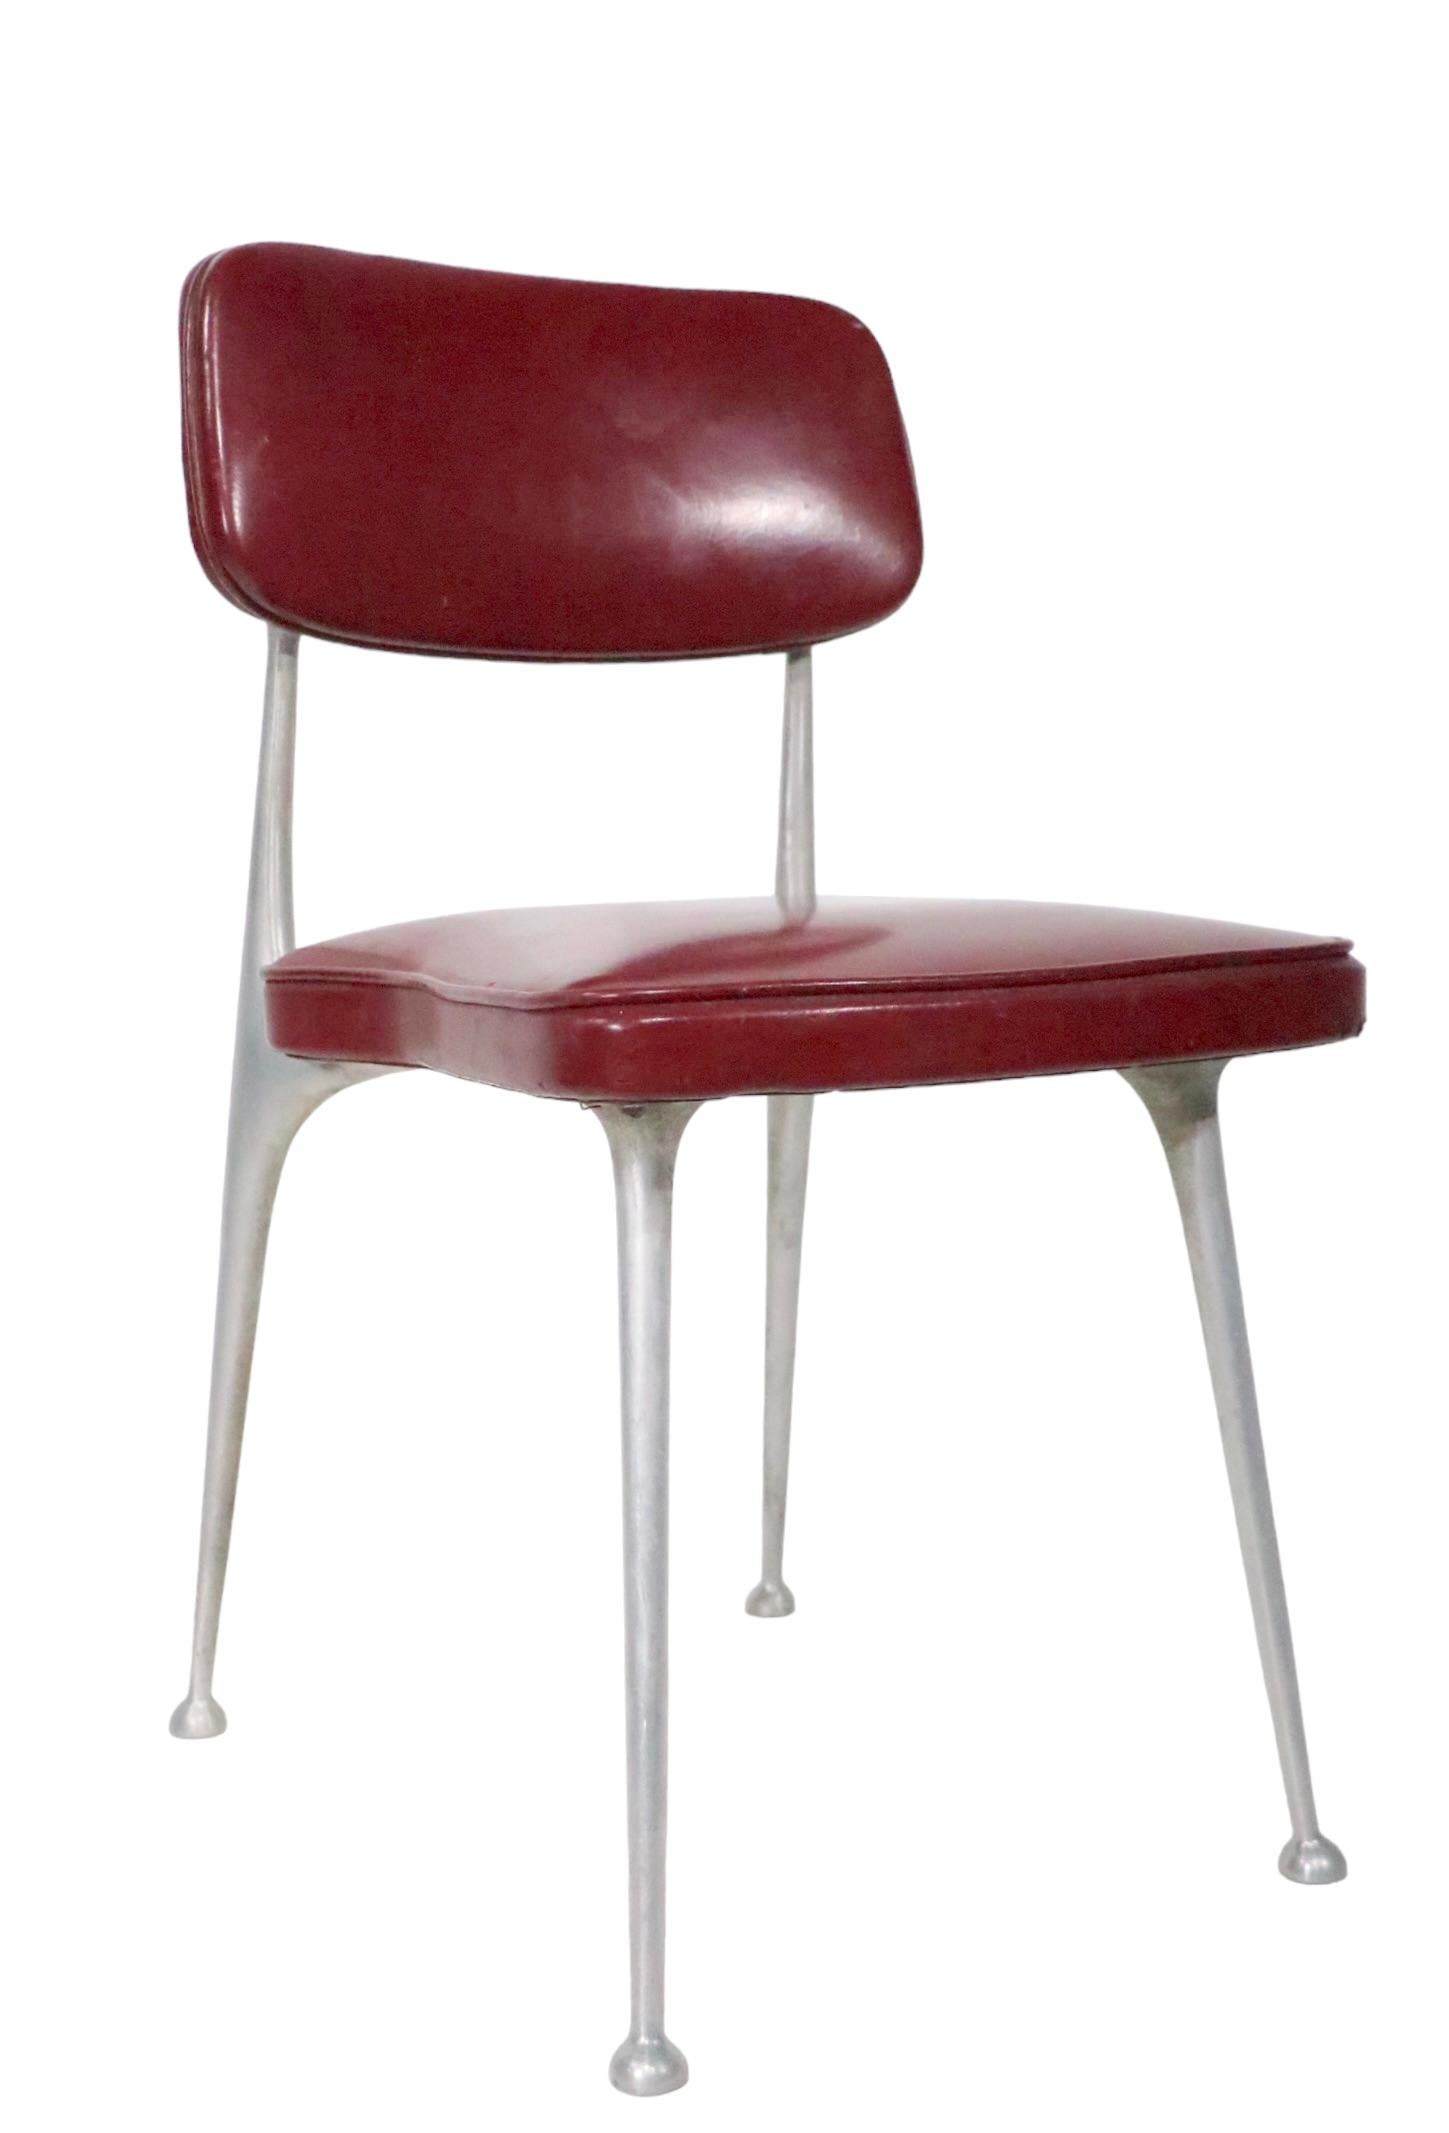 Shelby Williams Gazelle Cast Aluminum and Vinyl Chair, circa 1960s For Sale 6